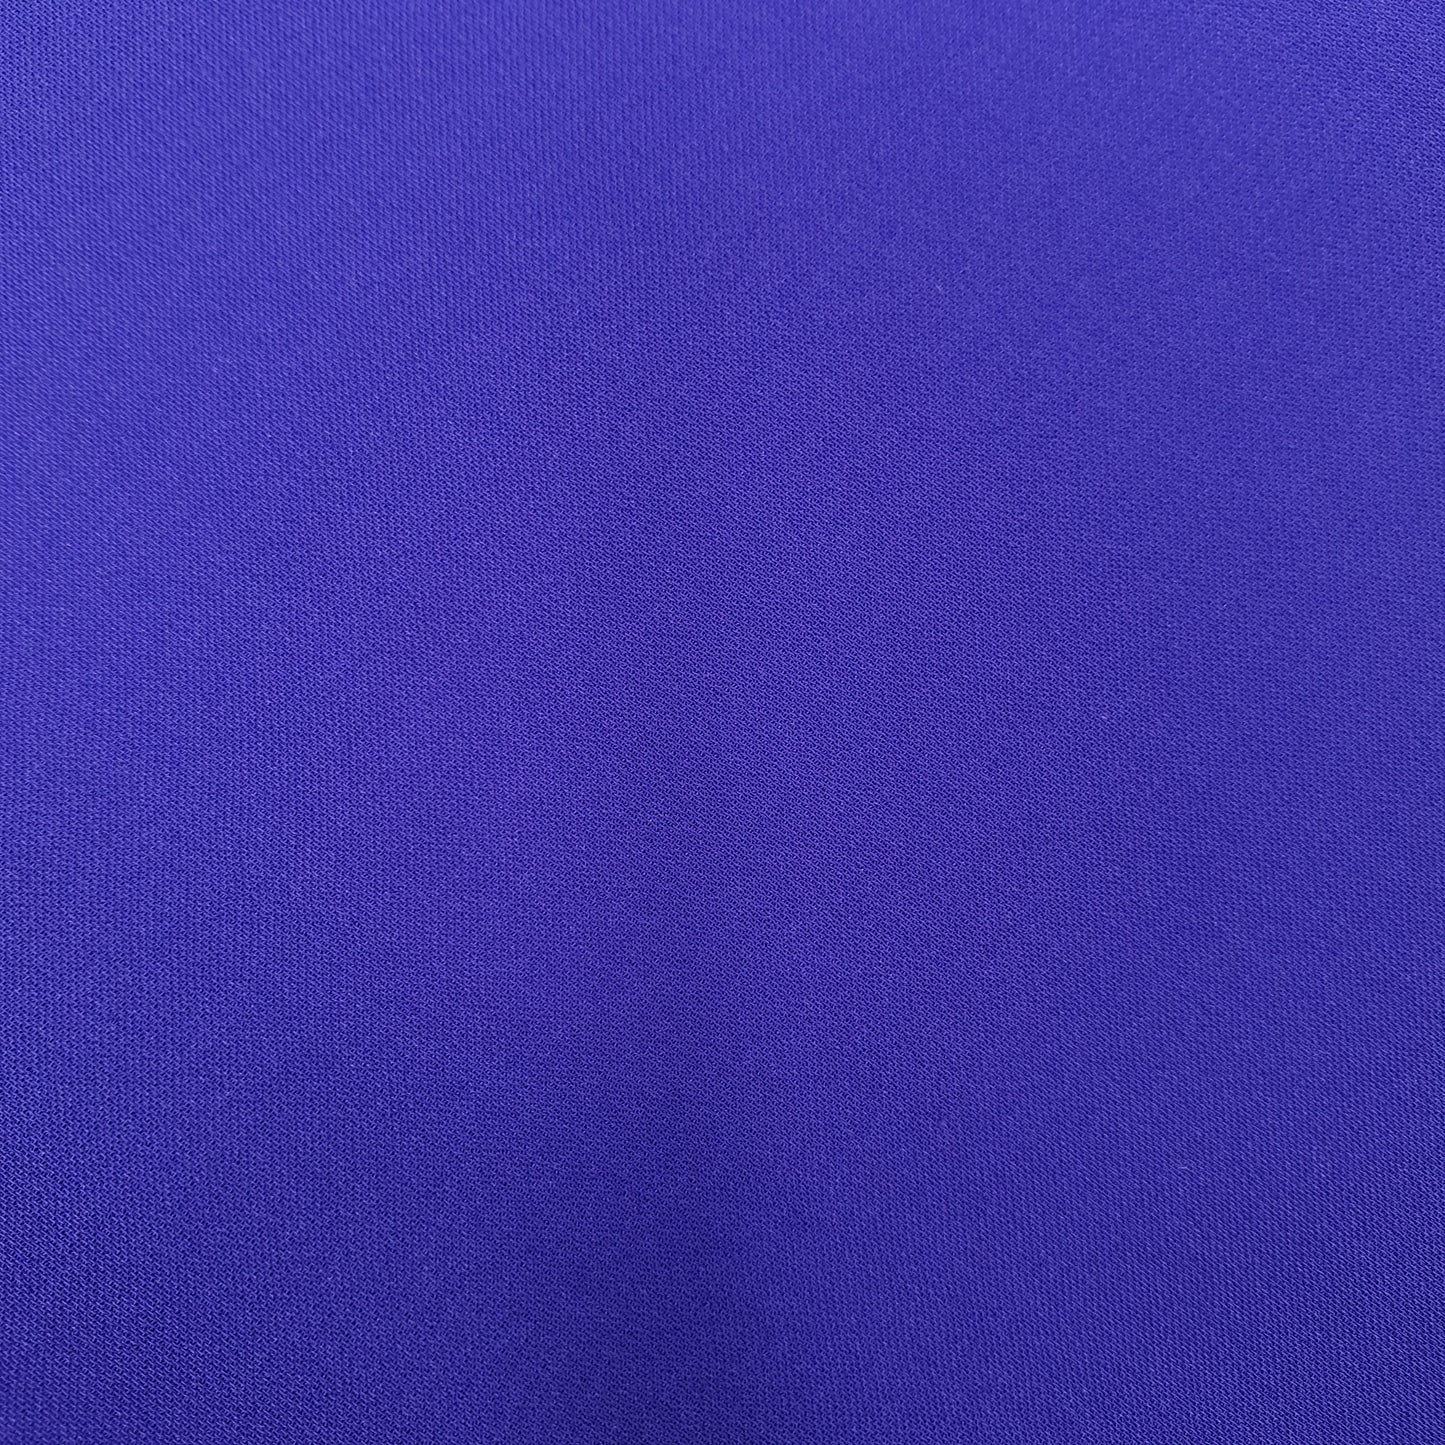 Polyester Rayon - Deep Ultramarine